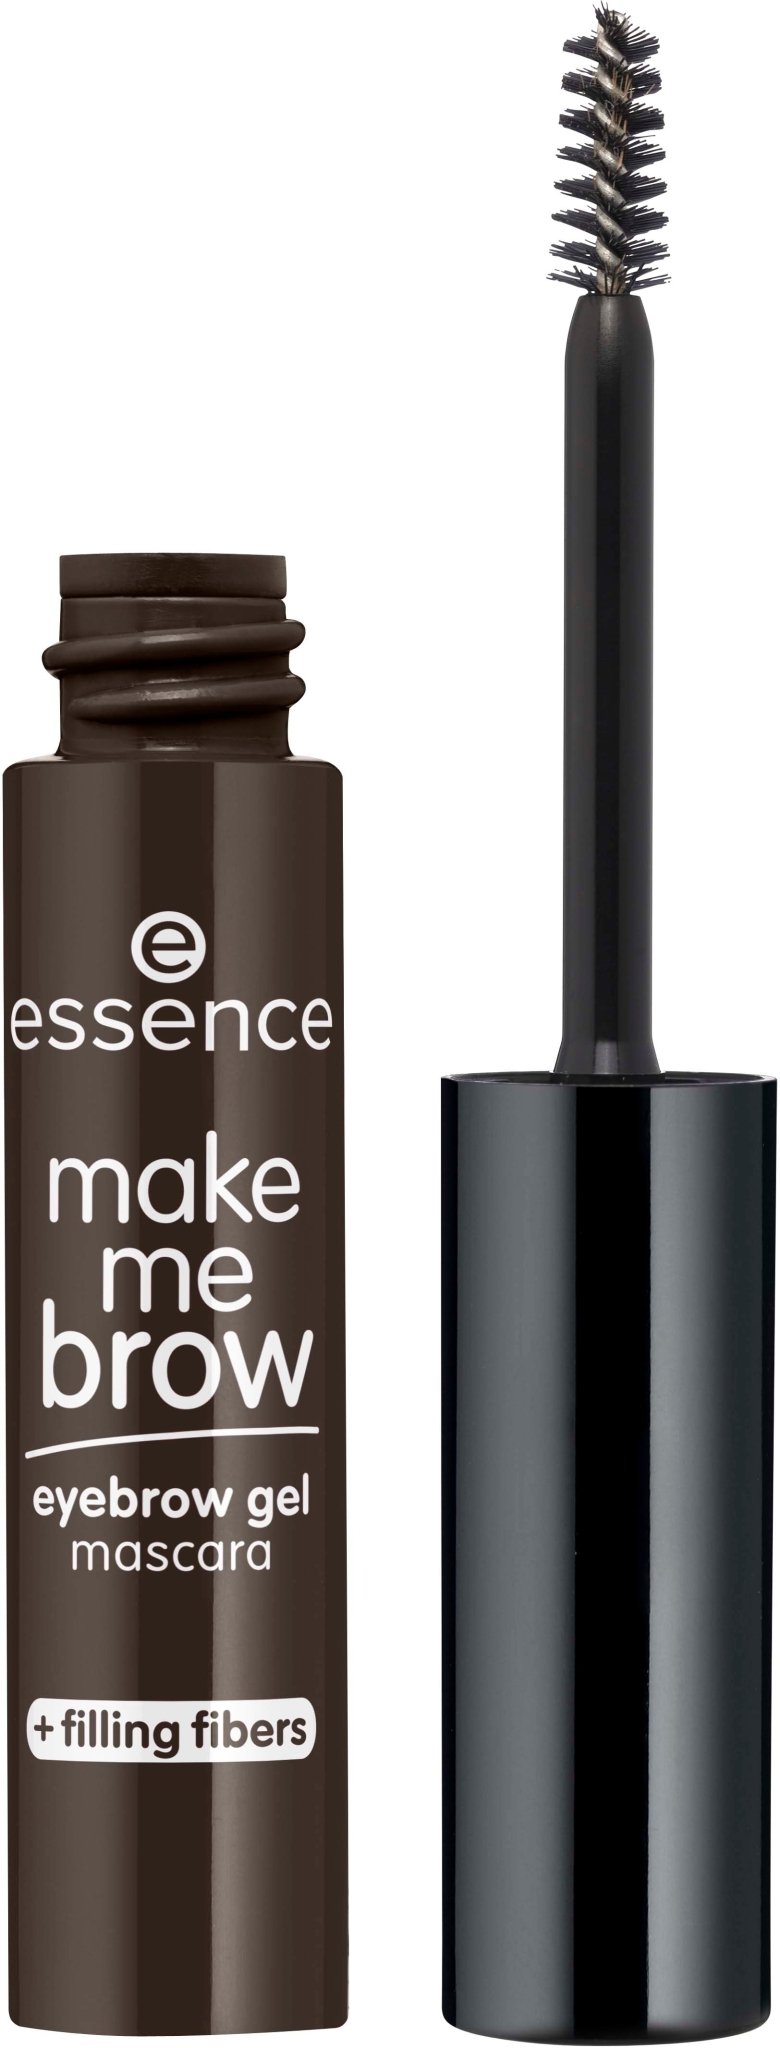 Essence Make Me Brow Eyebrow Gel Mascara 06 - AllurebeautypkEssence Make Me Brow Eyebrow Gel Mascara 06